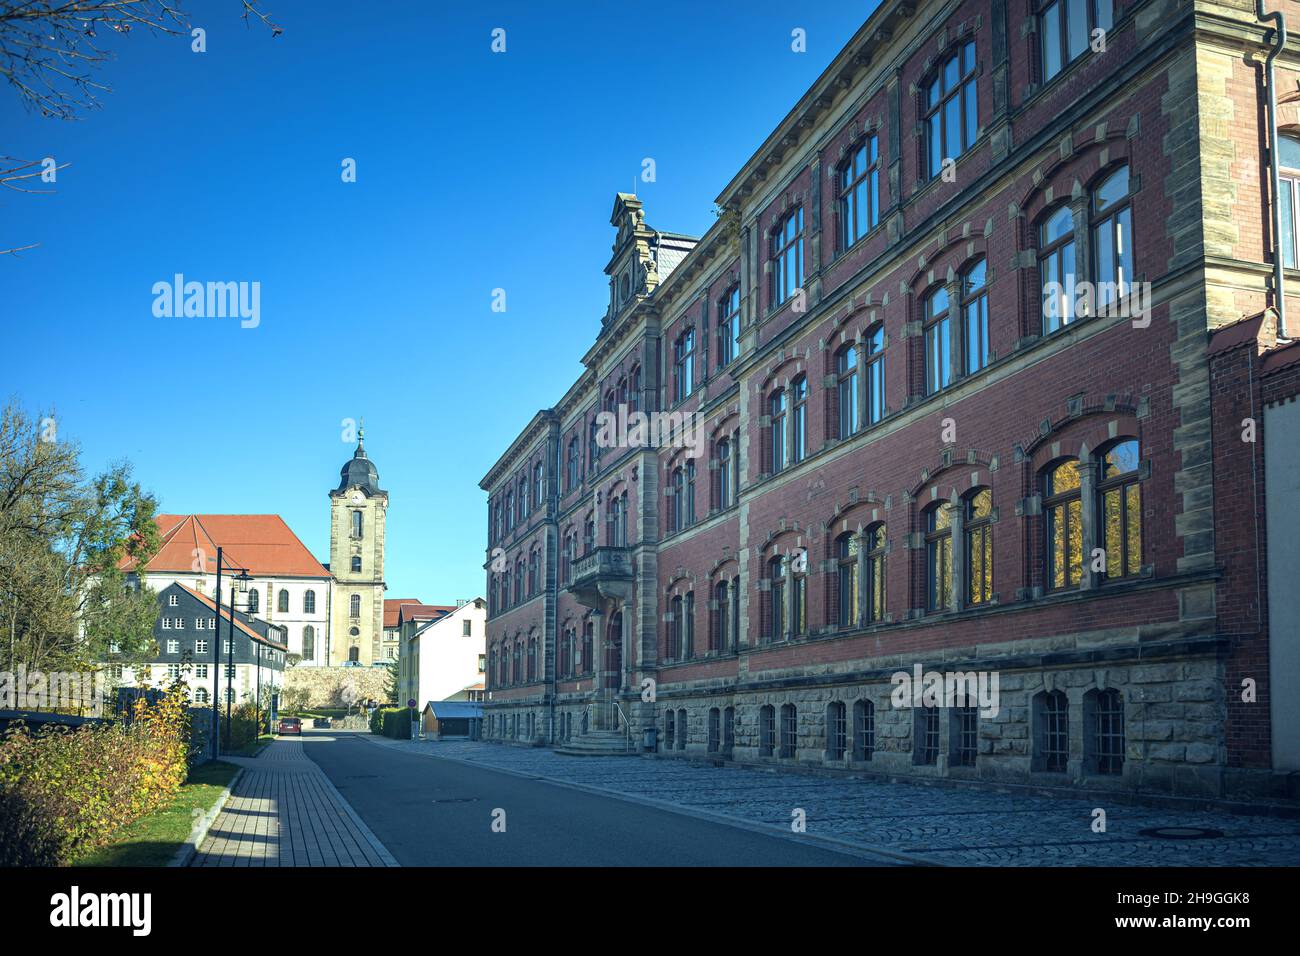 HILDBURGHAUSEN, DEUTSCHLAND - CIRCA OKTOBER 2021: Das Stadtbild von Hildburghausen, Thüringen, Deutschland. Stockfoto